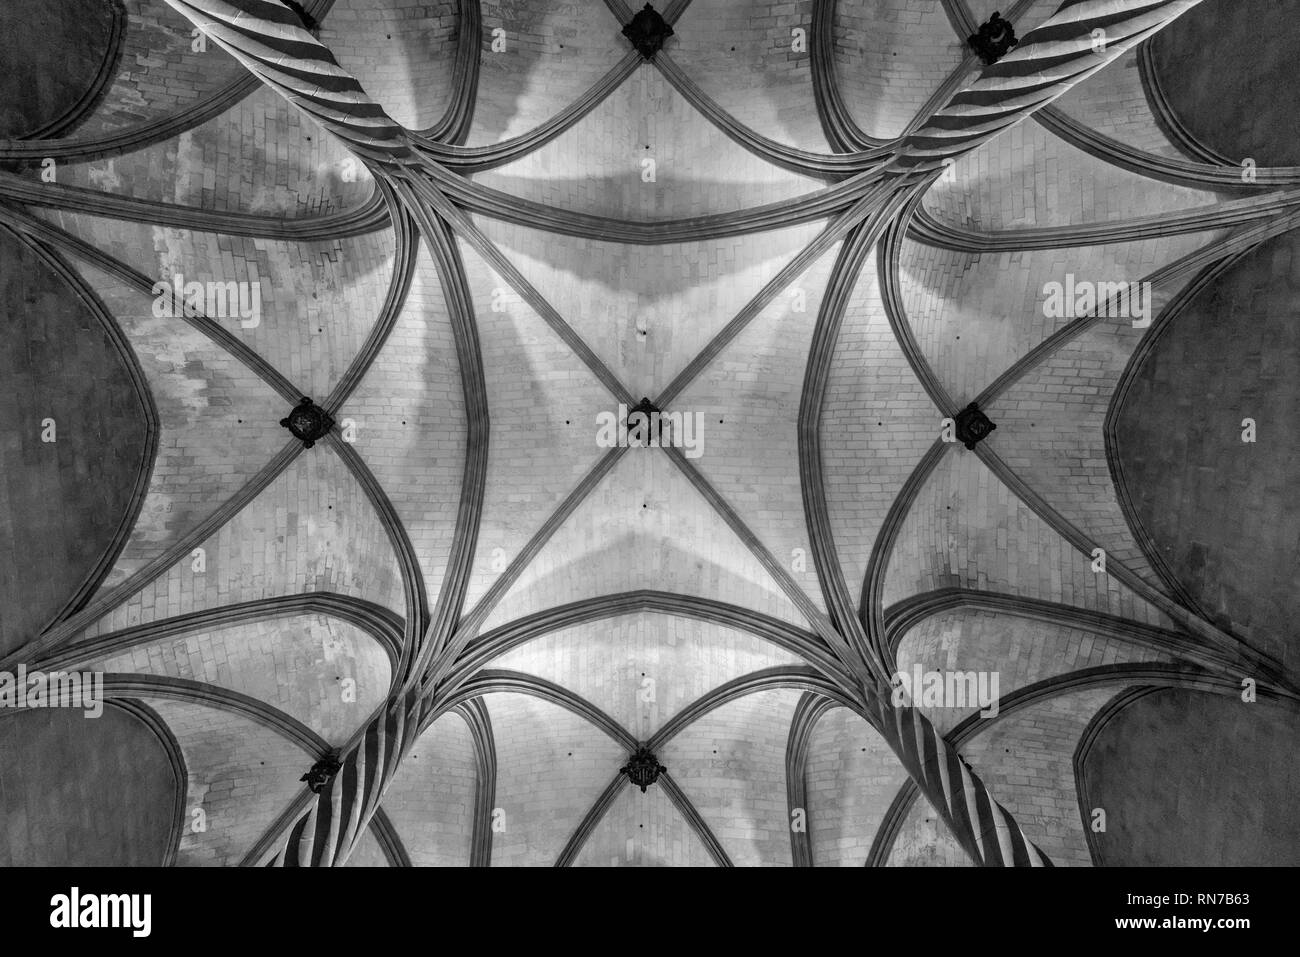 Stadt Palma, Mallorca, Spanien - Innenraum der Lonja de Palma de Mallorca (Llotja dels Mercaders) Dach detail. Jahrhundert im gotischen Stil monumentalen alten Stockfoto